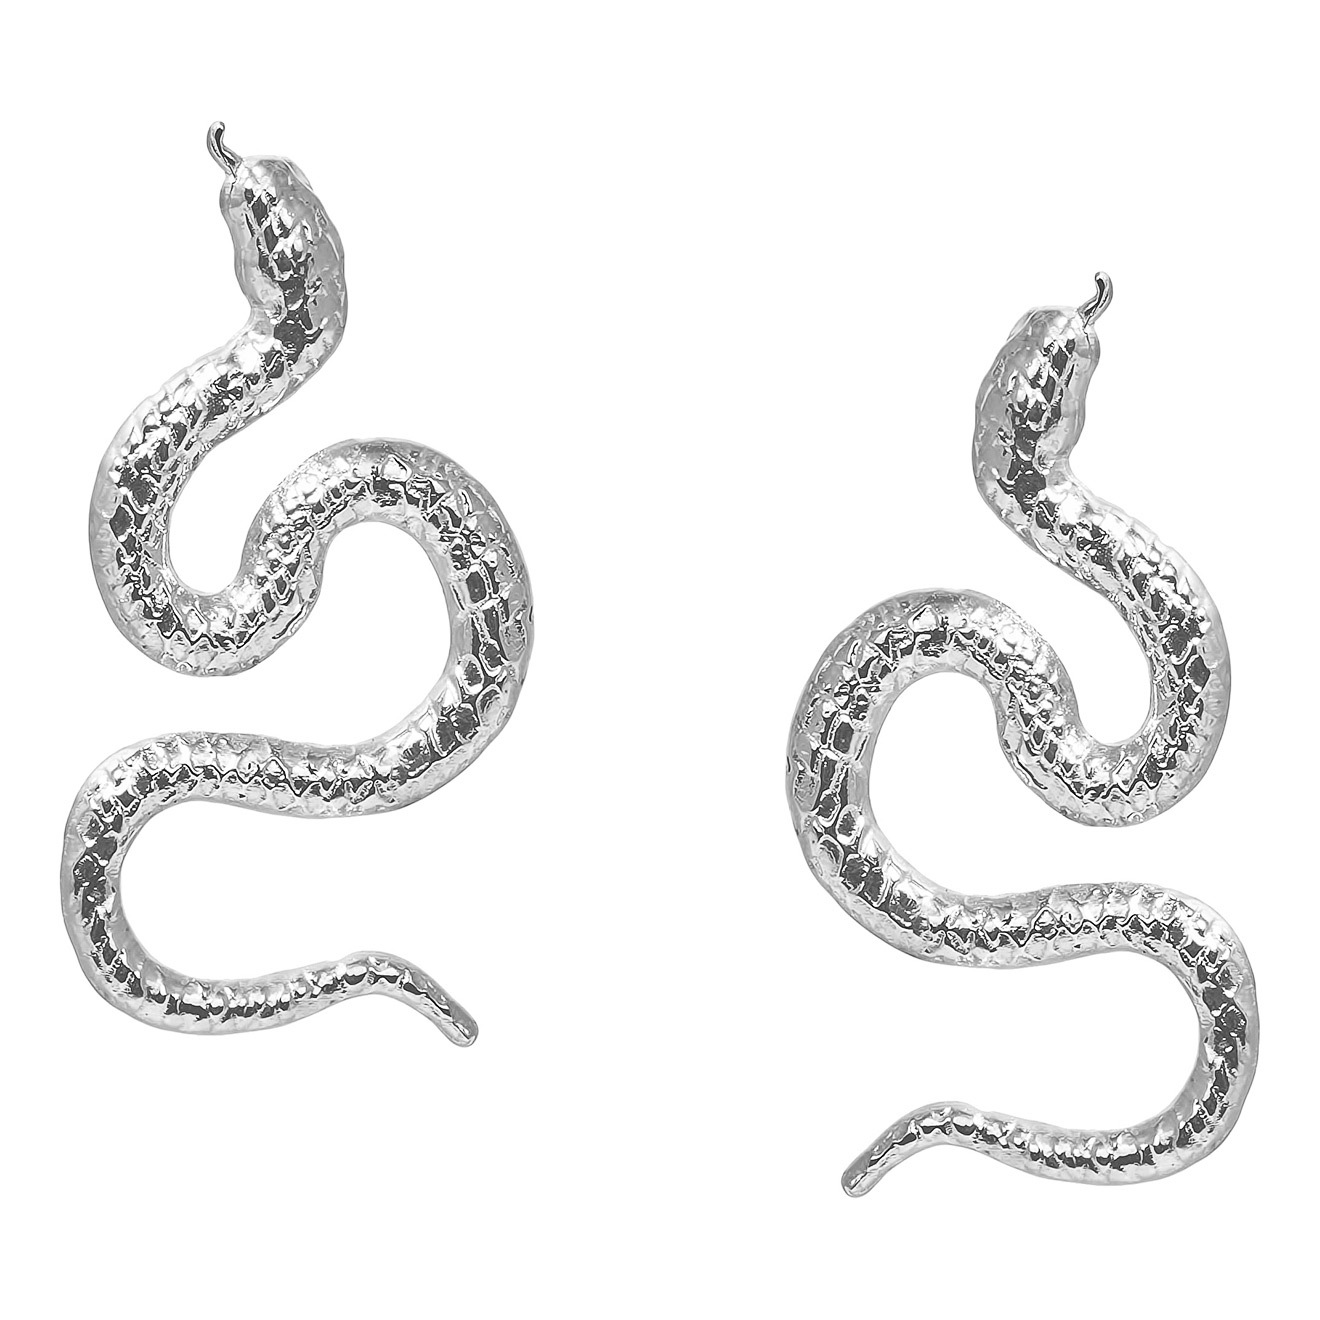 Natia x Lako Покрытые серебром серьги-змеи